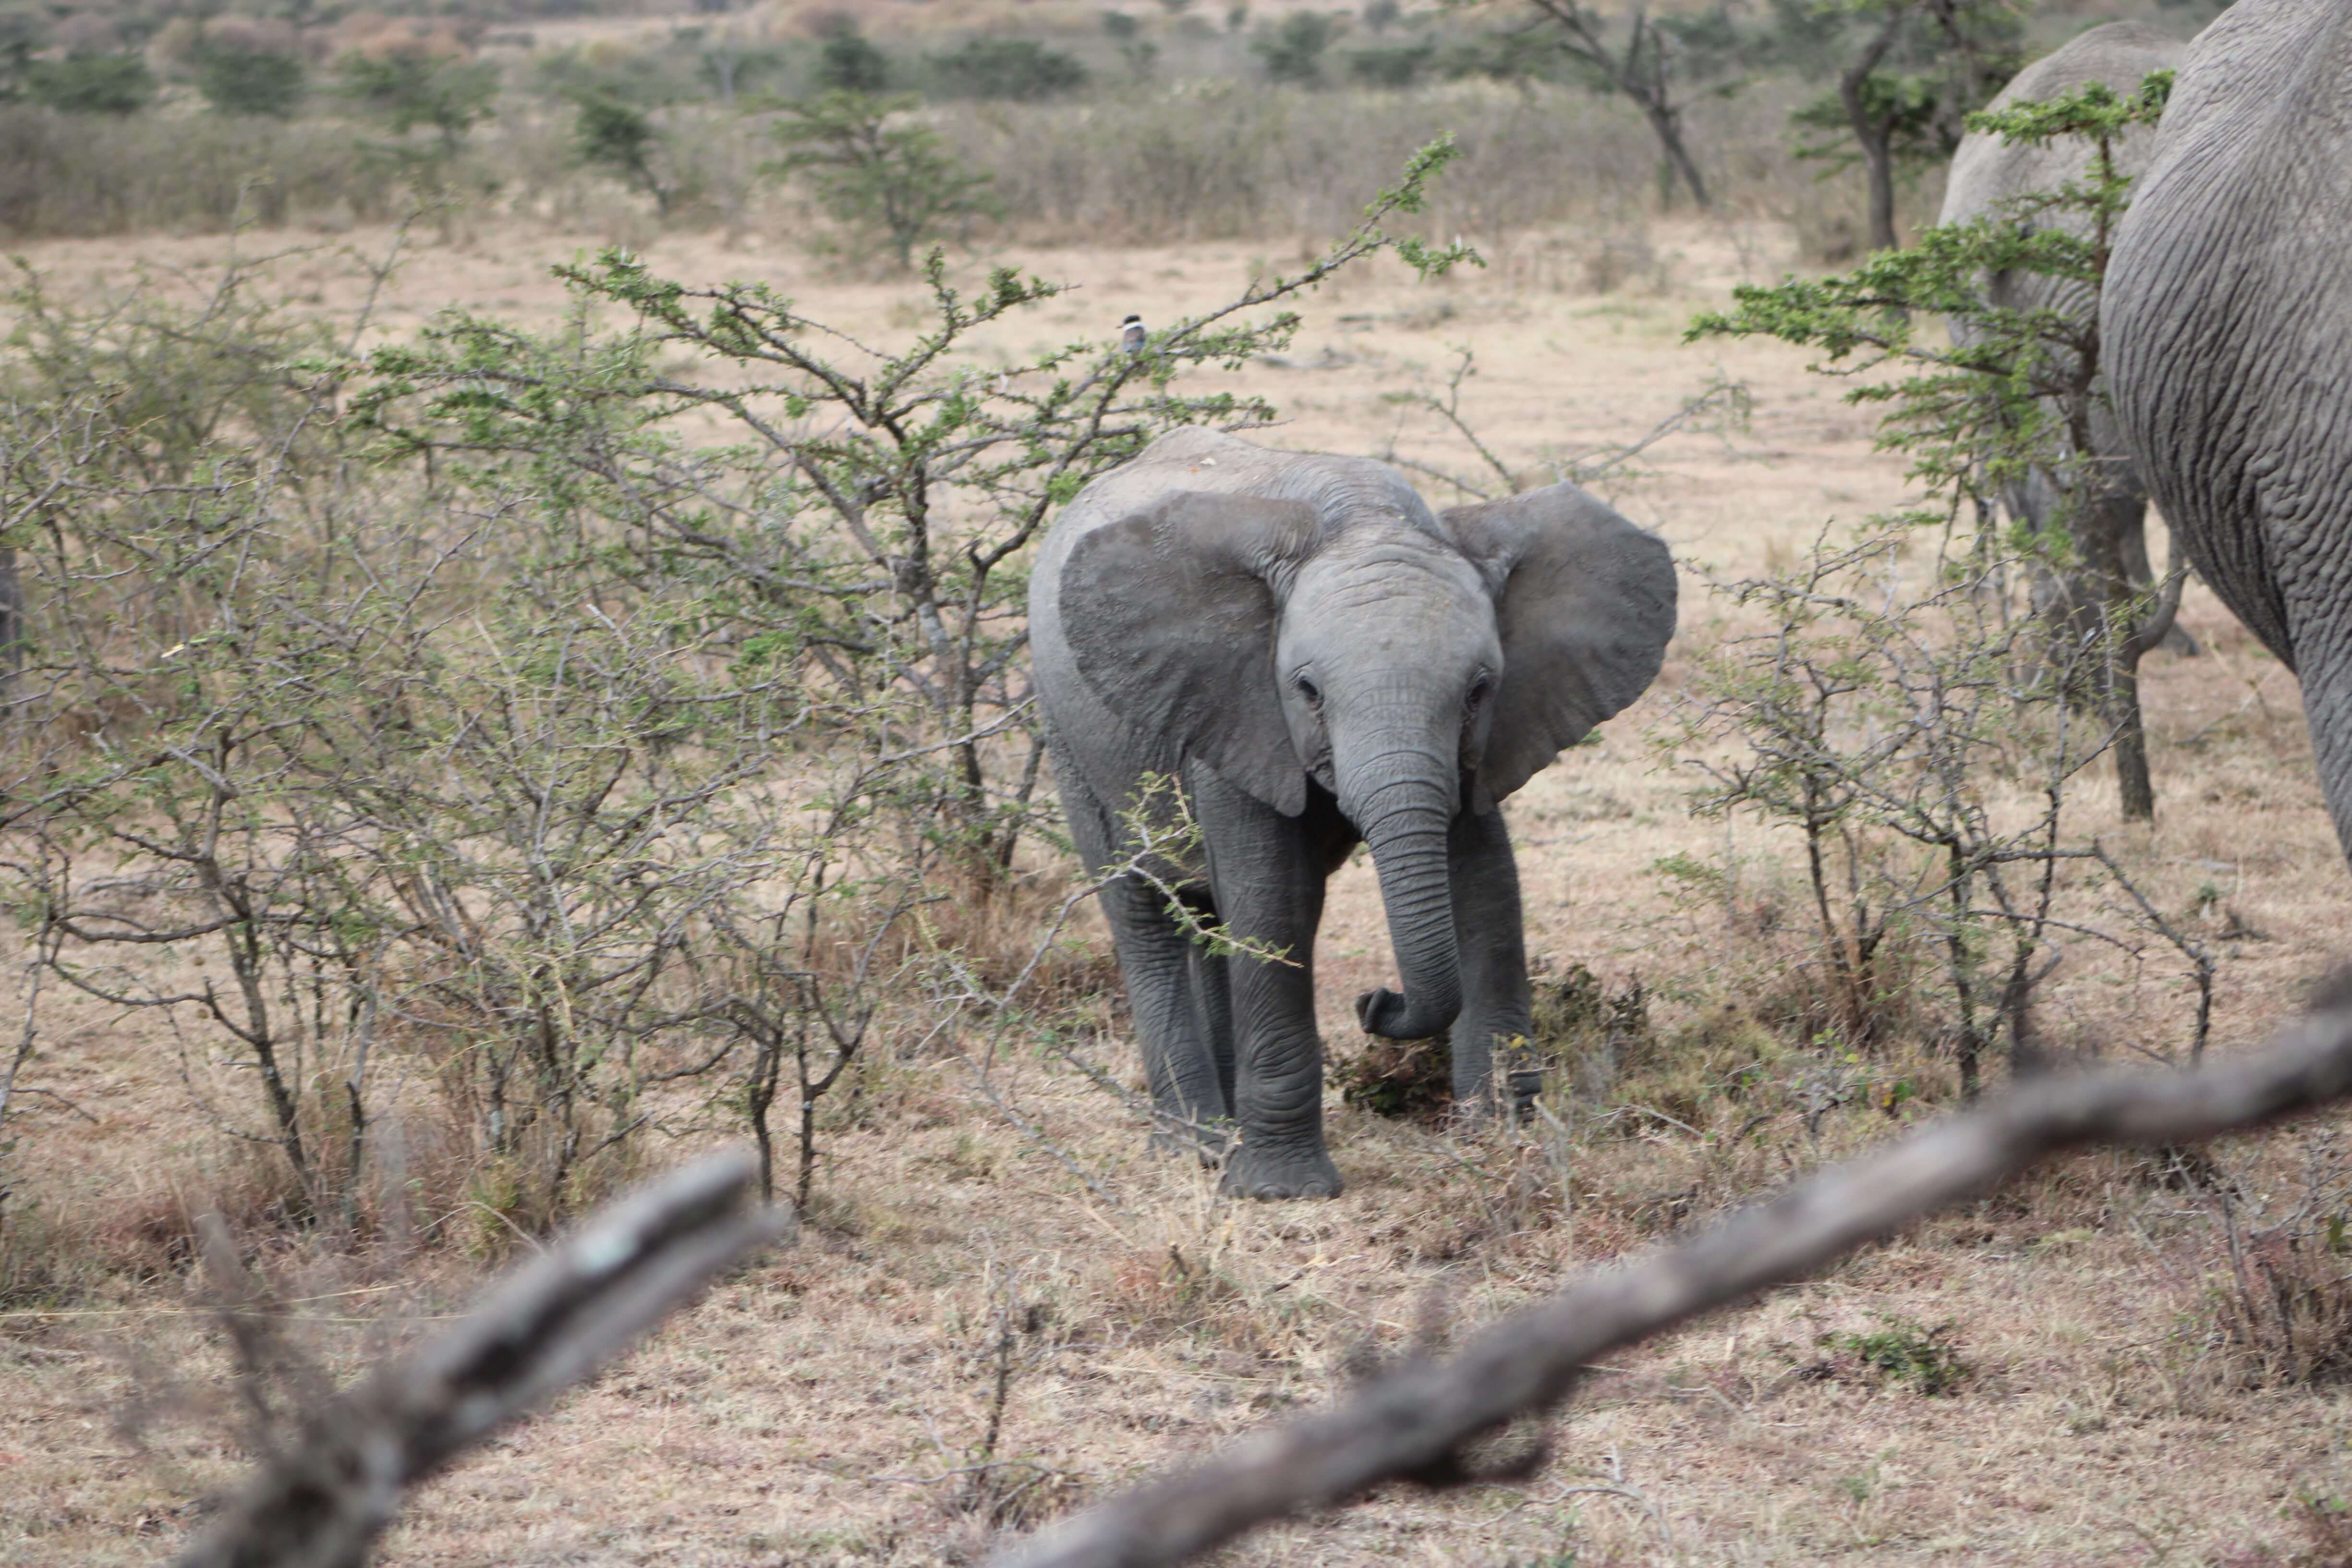 A baby elephant on safari